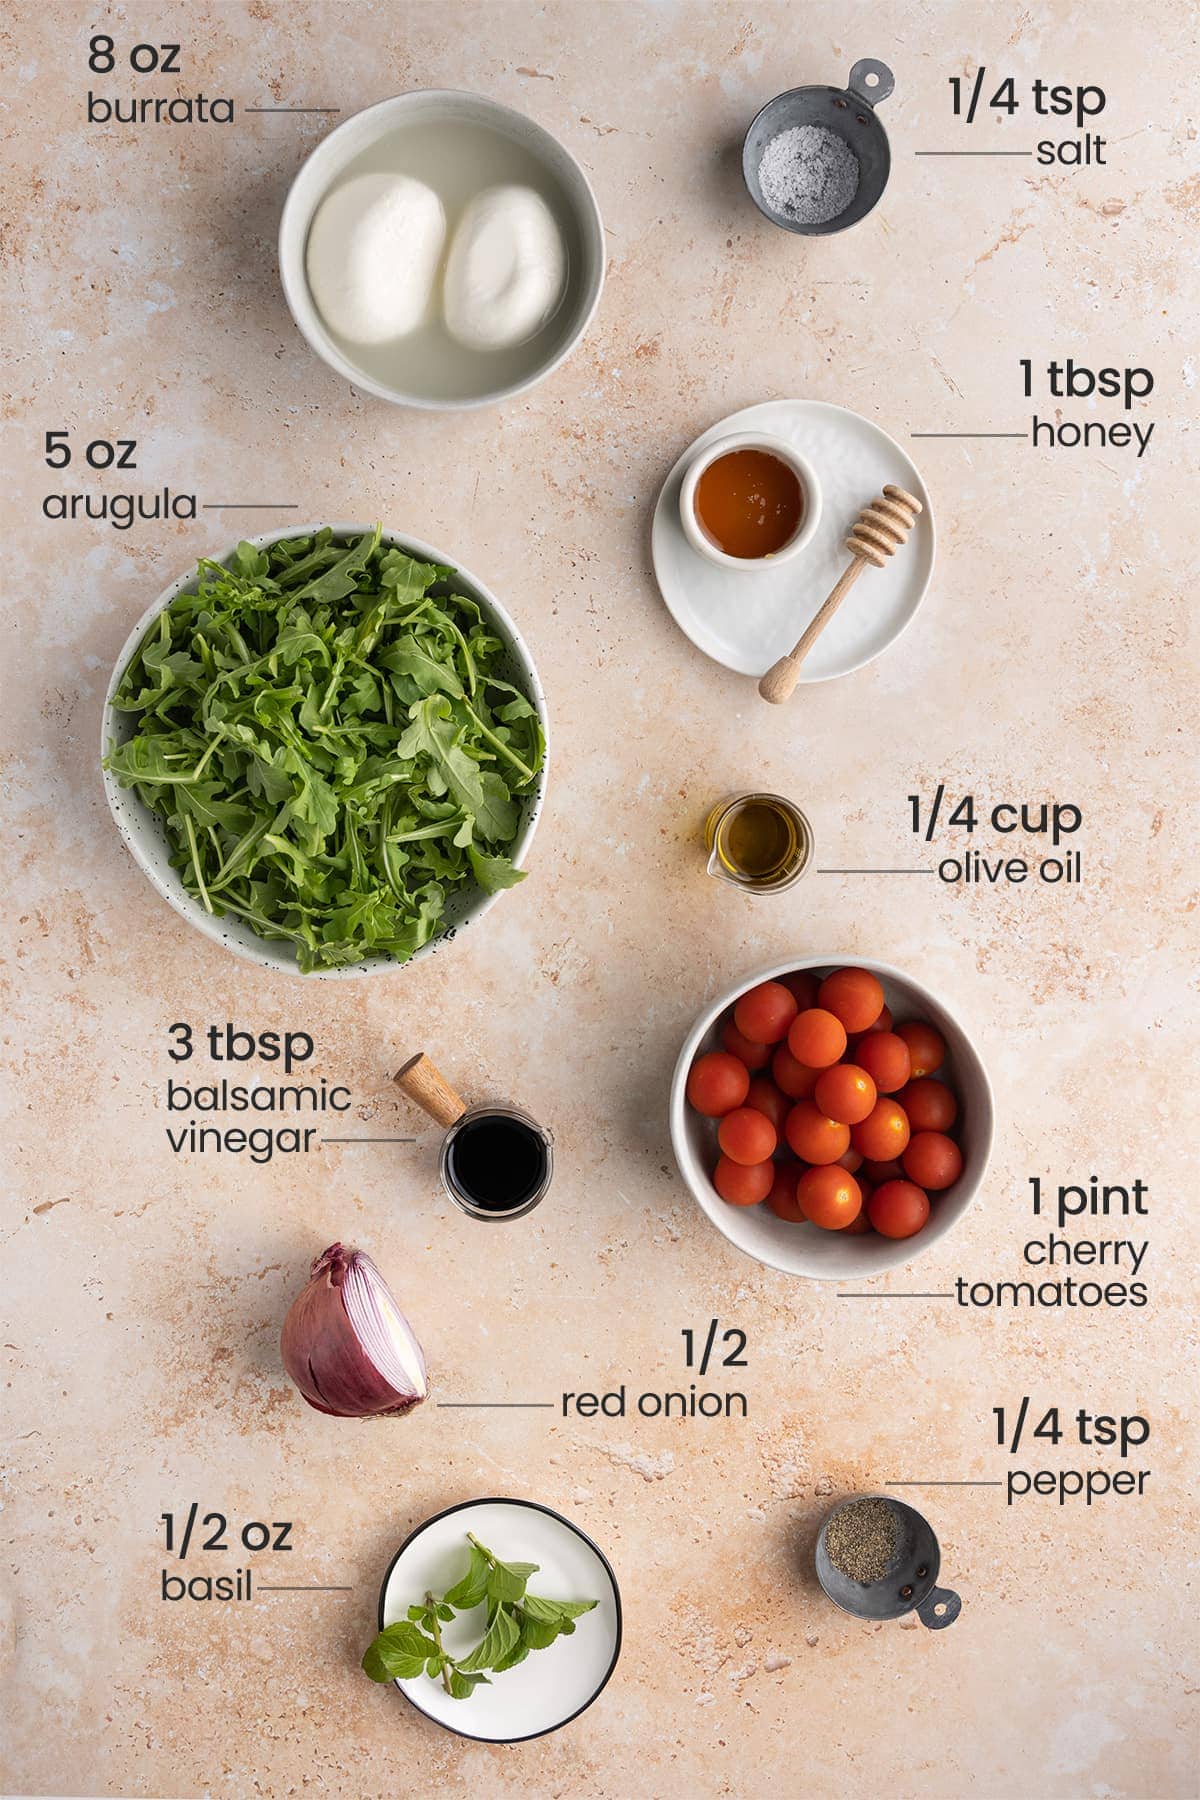 ingredients for arugula burrata salad - salt, burrata, arugula, honey, olive oil, balsamic vinegar, cherry tomatoes, red onion, basil, pepper